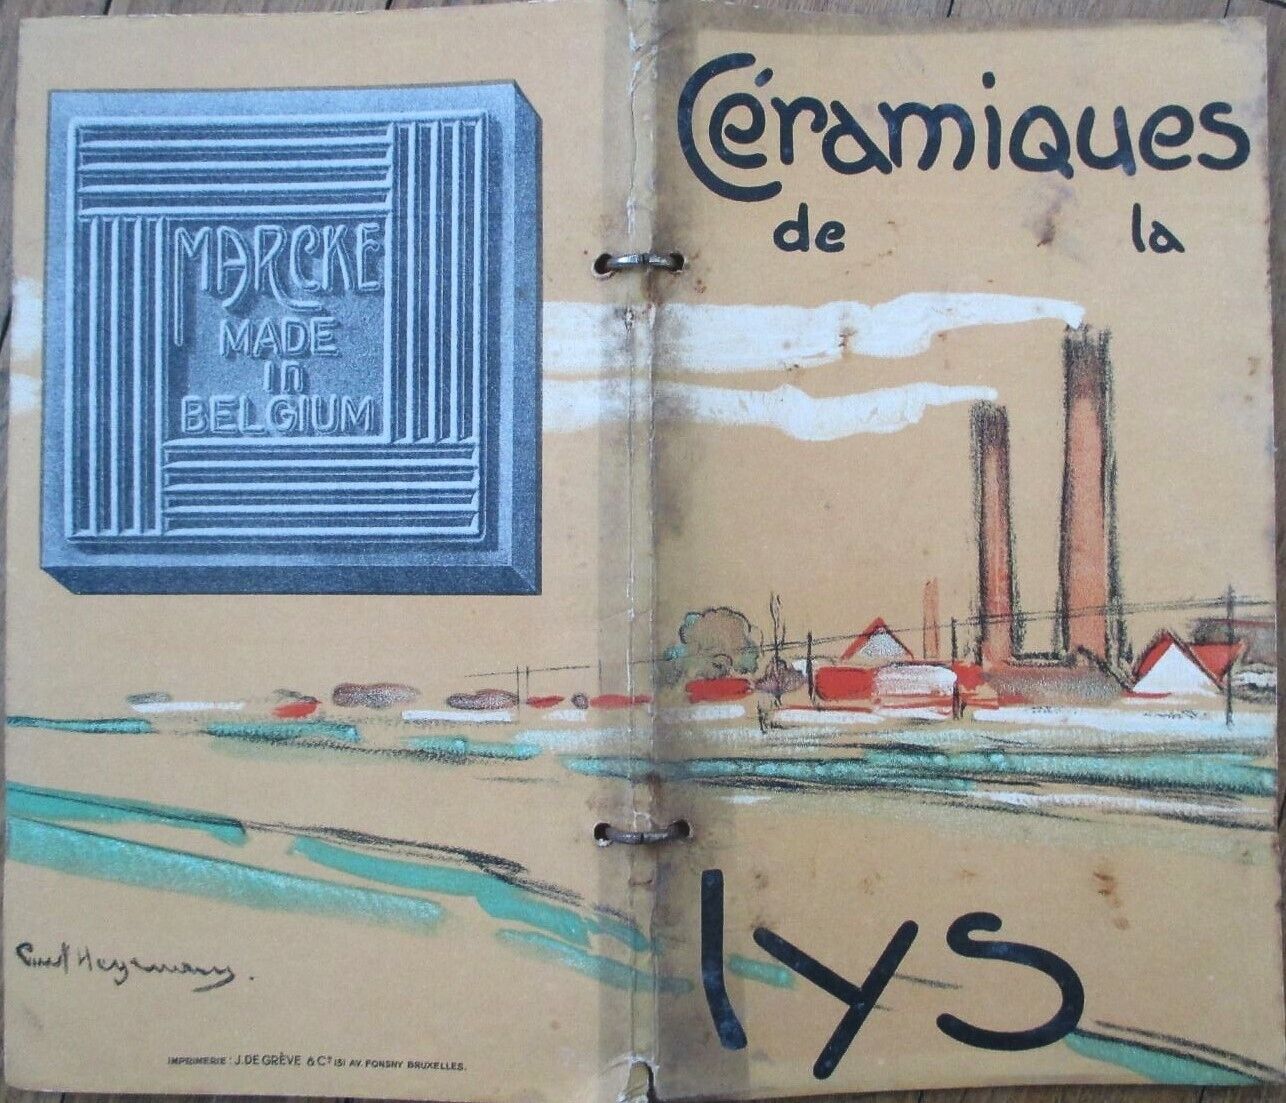 Ceramic Tile 1920s Advertising Trade Catalog, Willebroeck, Belgium, Color Litho